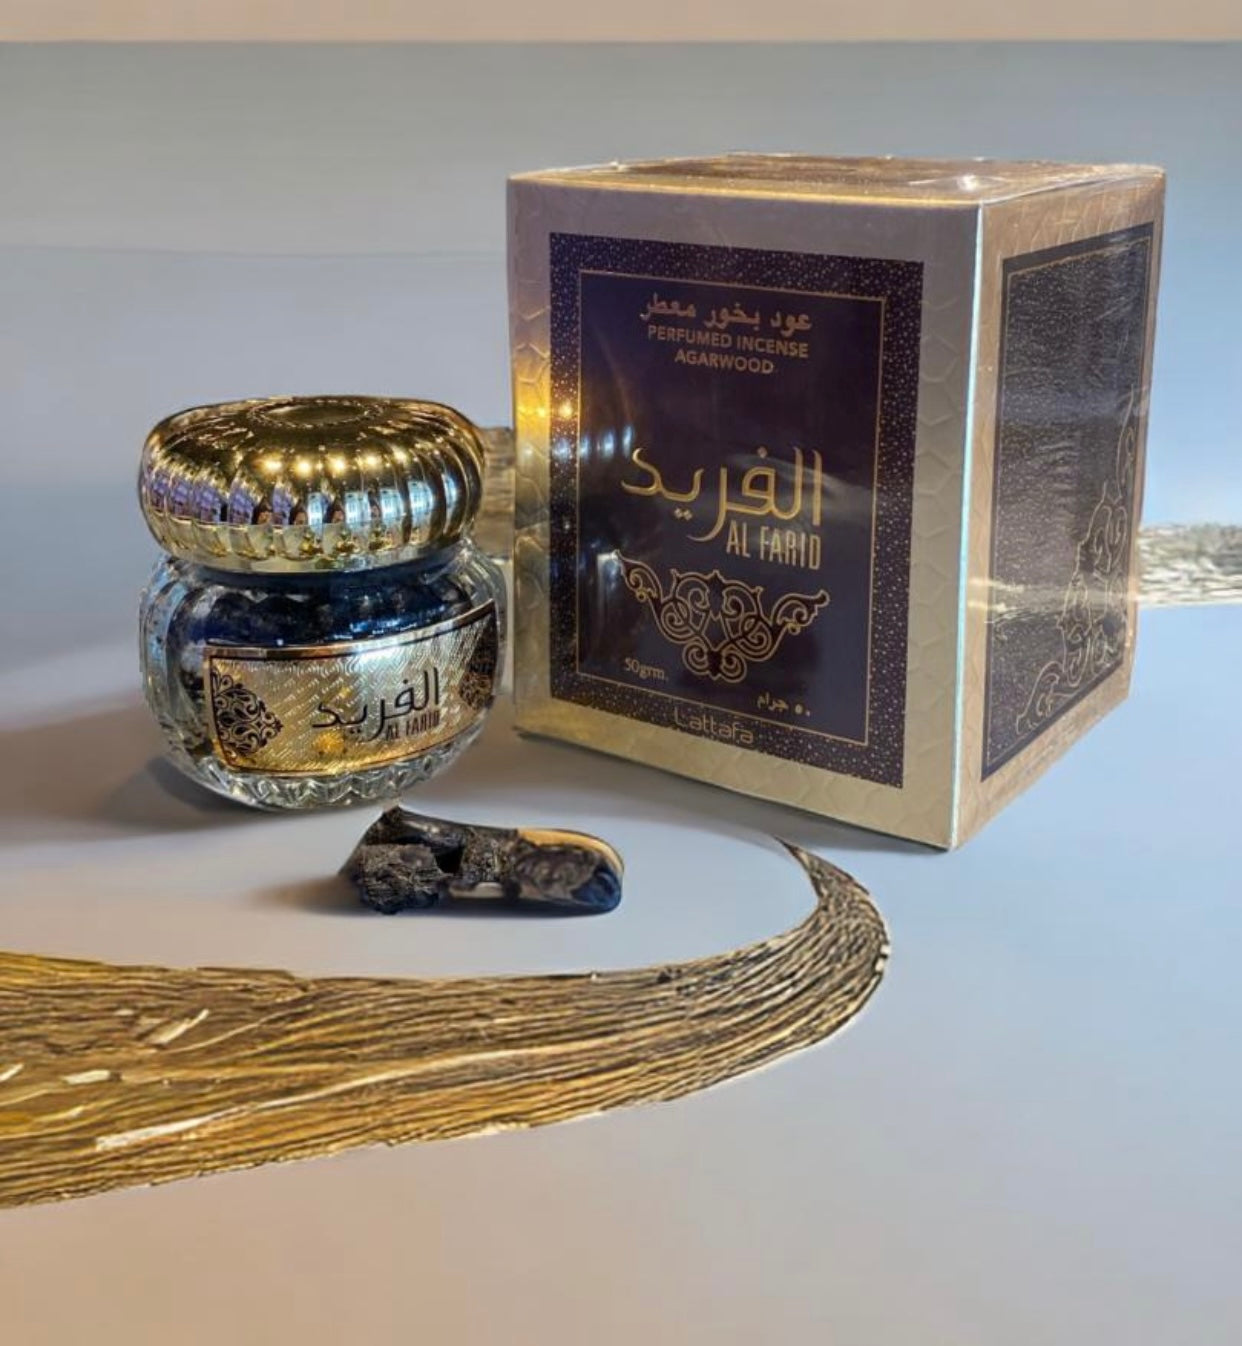 Al farid Bakhoor/ "The Unique" Incense